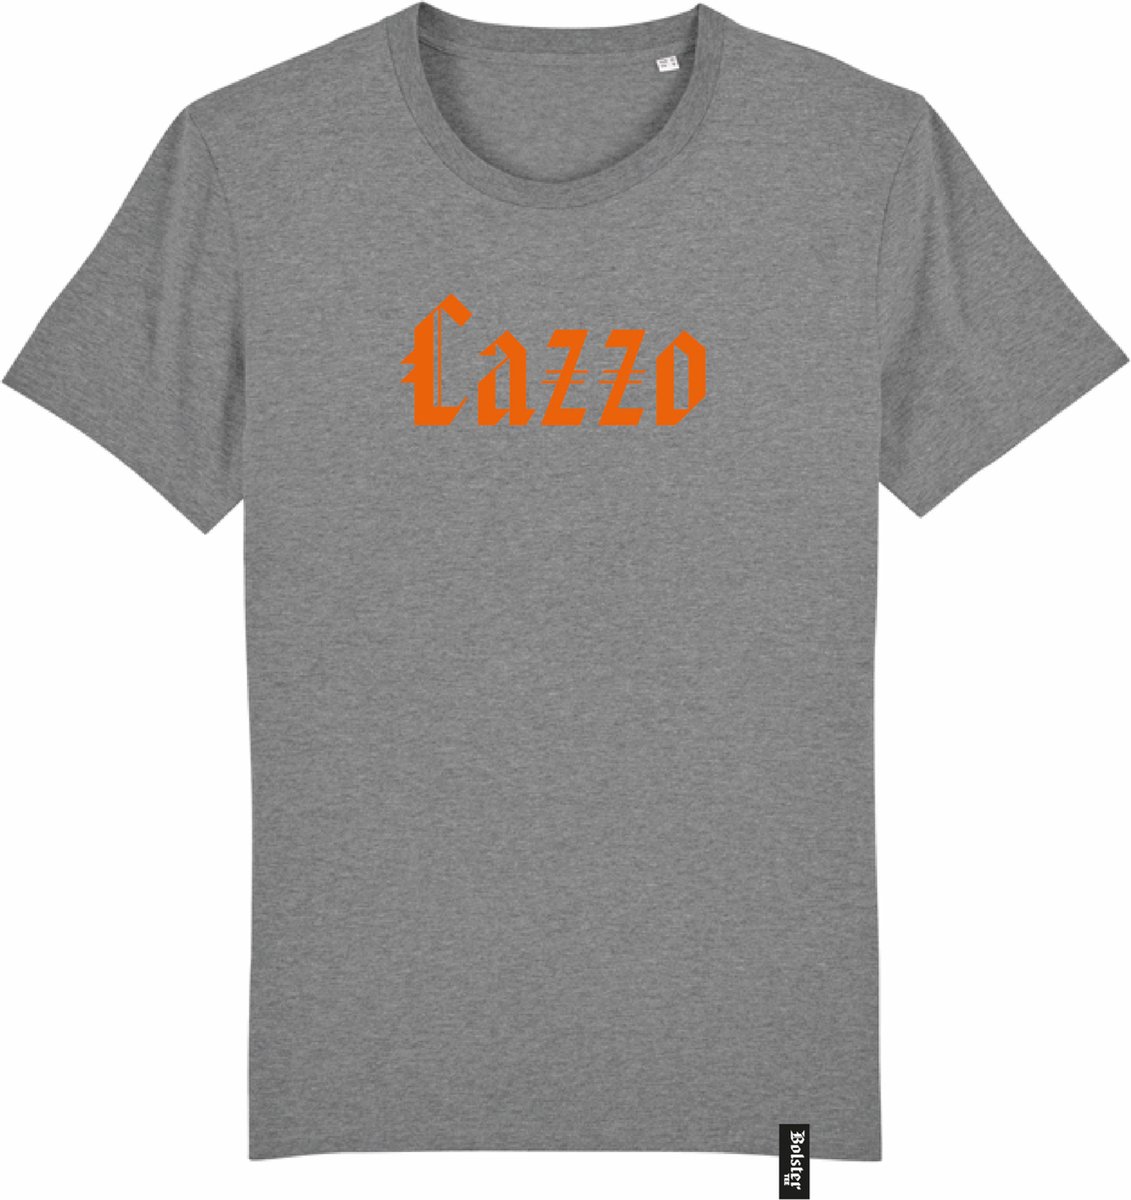 T-shirt | Bolster#0005 - Cazzo| Maat: L